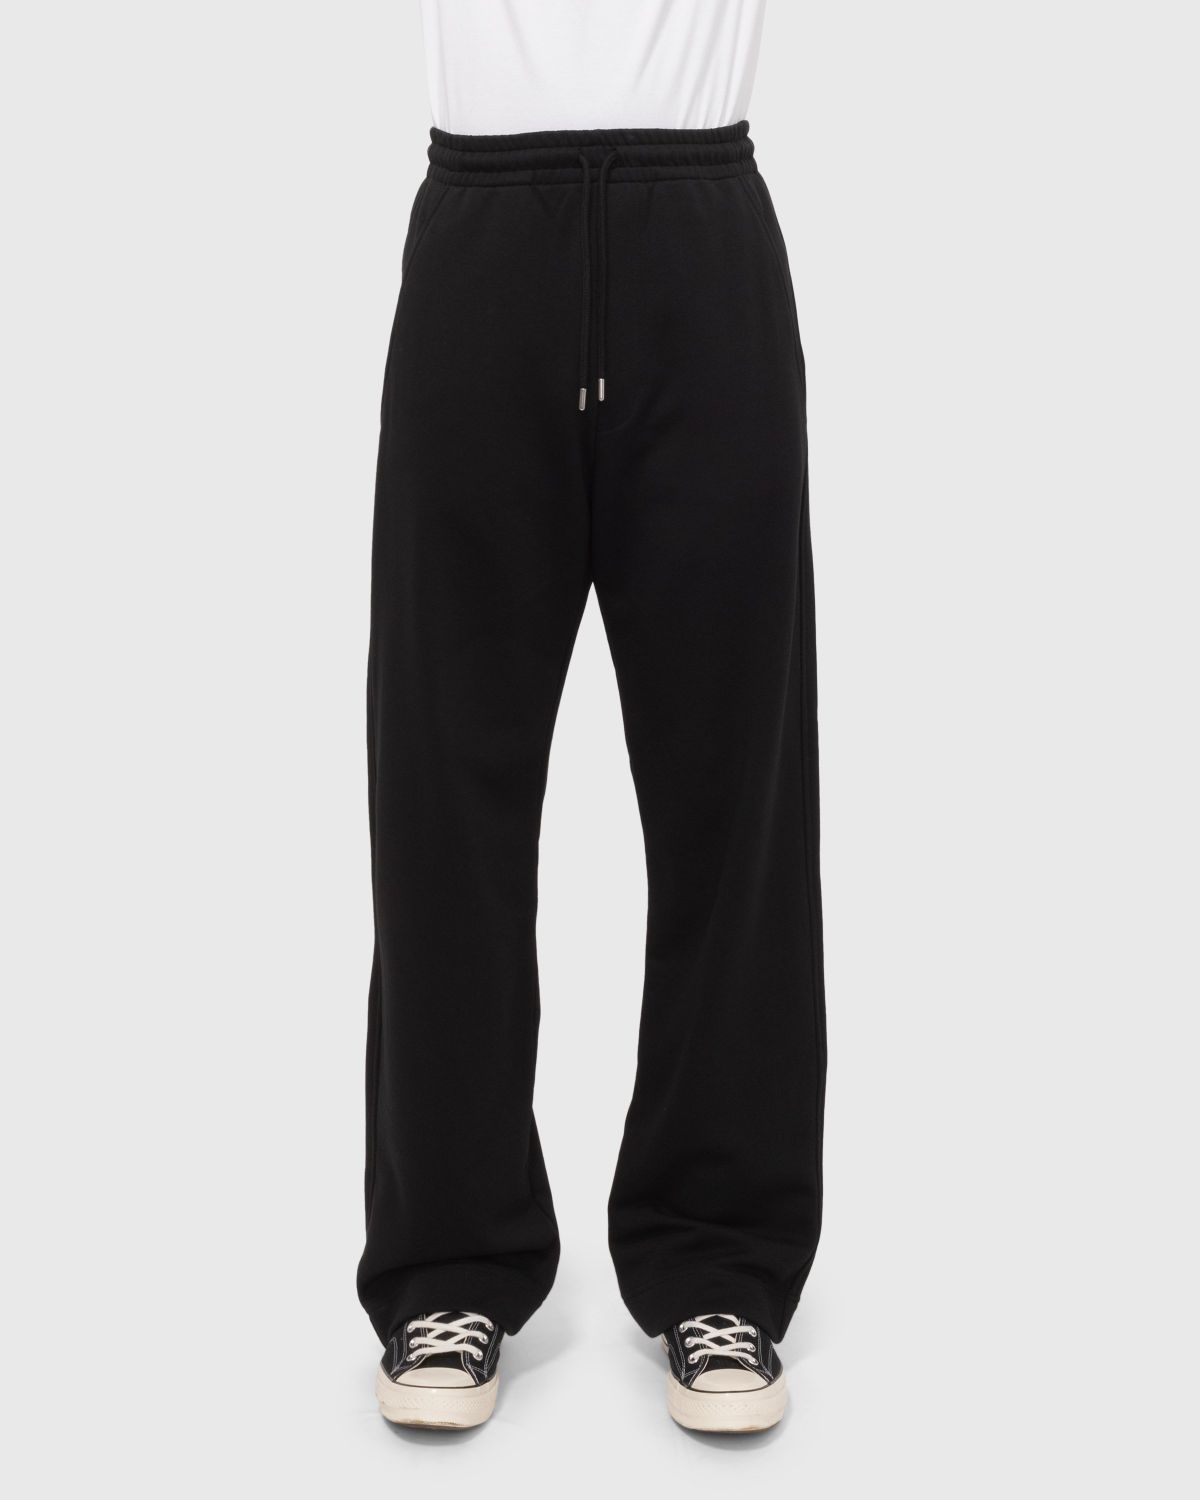 Dries van Noten – Hamer Sweatpants Black - Sweatpants - Black - Image 2